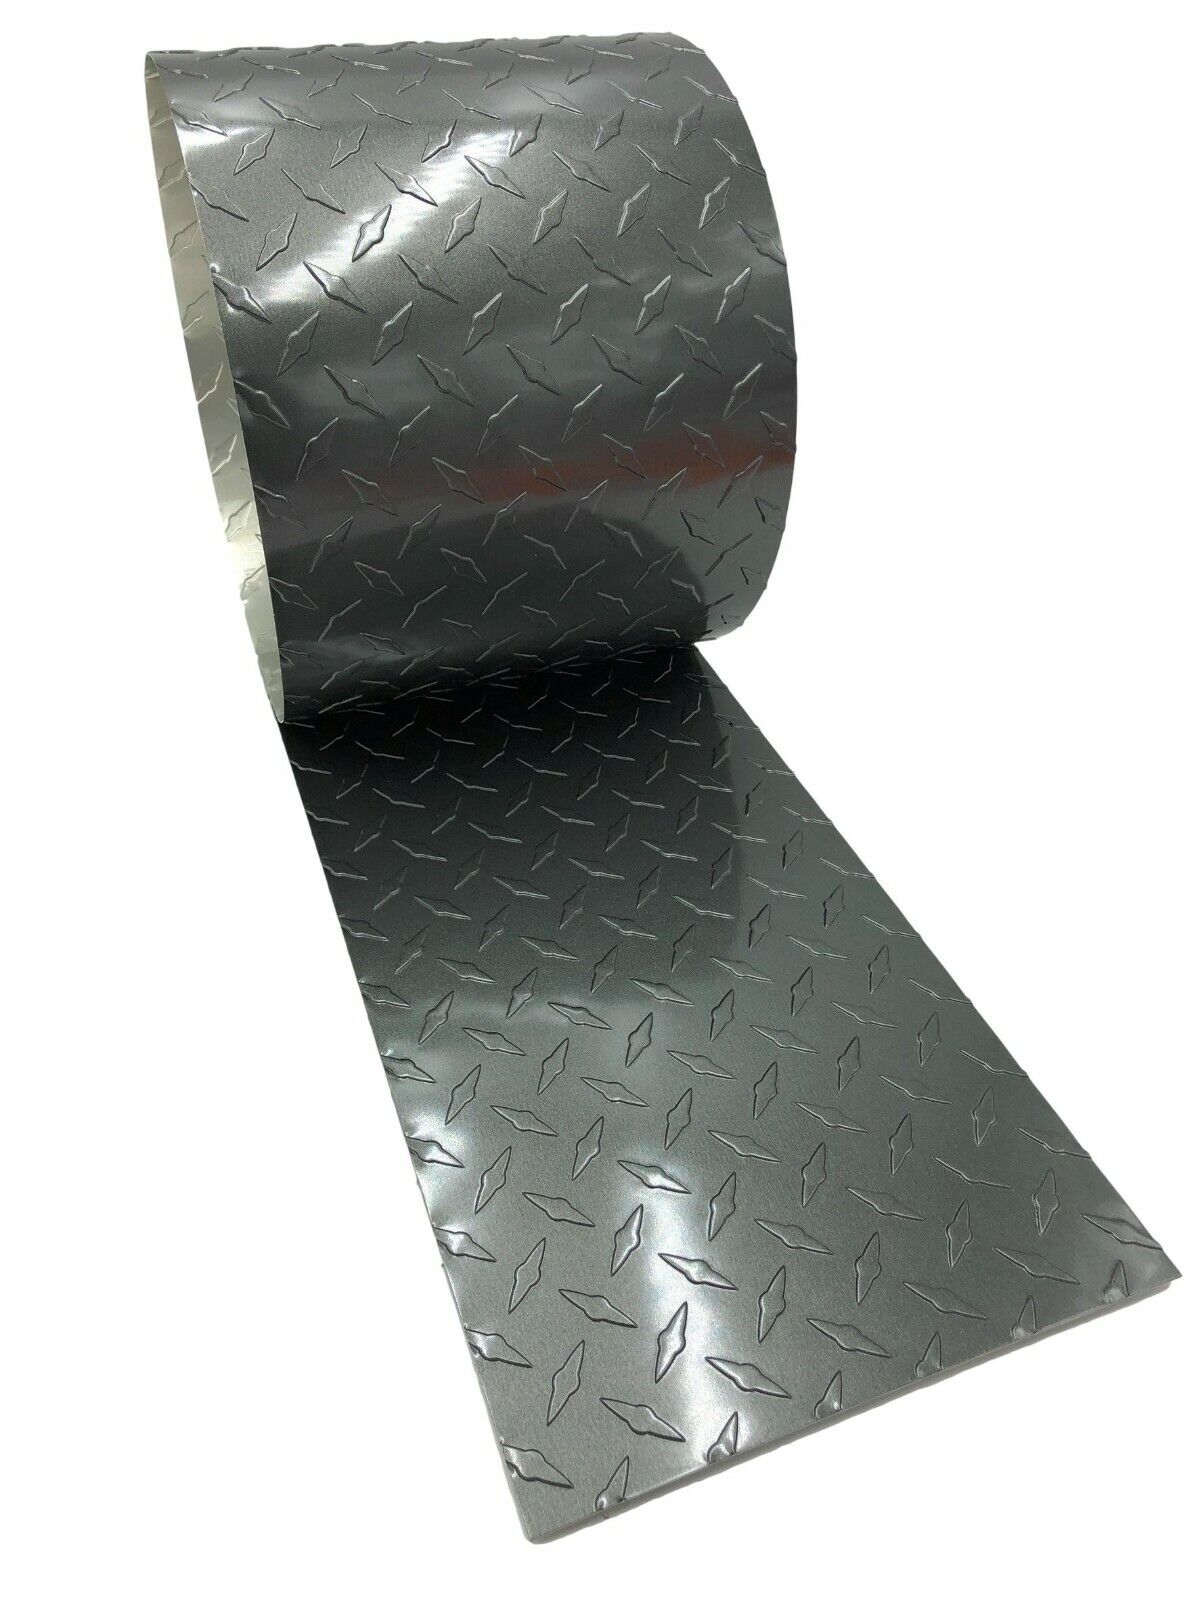 EAGLE 1 Thin .025 Aluminum Diamond Tread Plate Rolls Gravel Guards Many Colors Wysoko oceniane w kraju